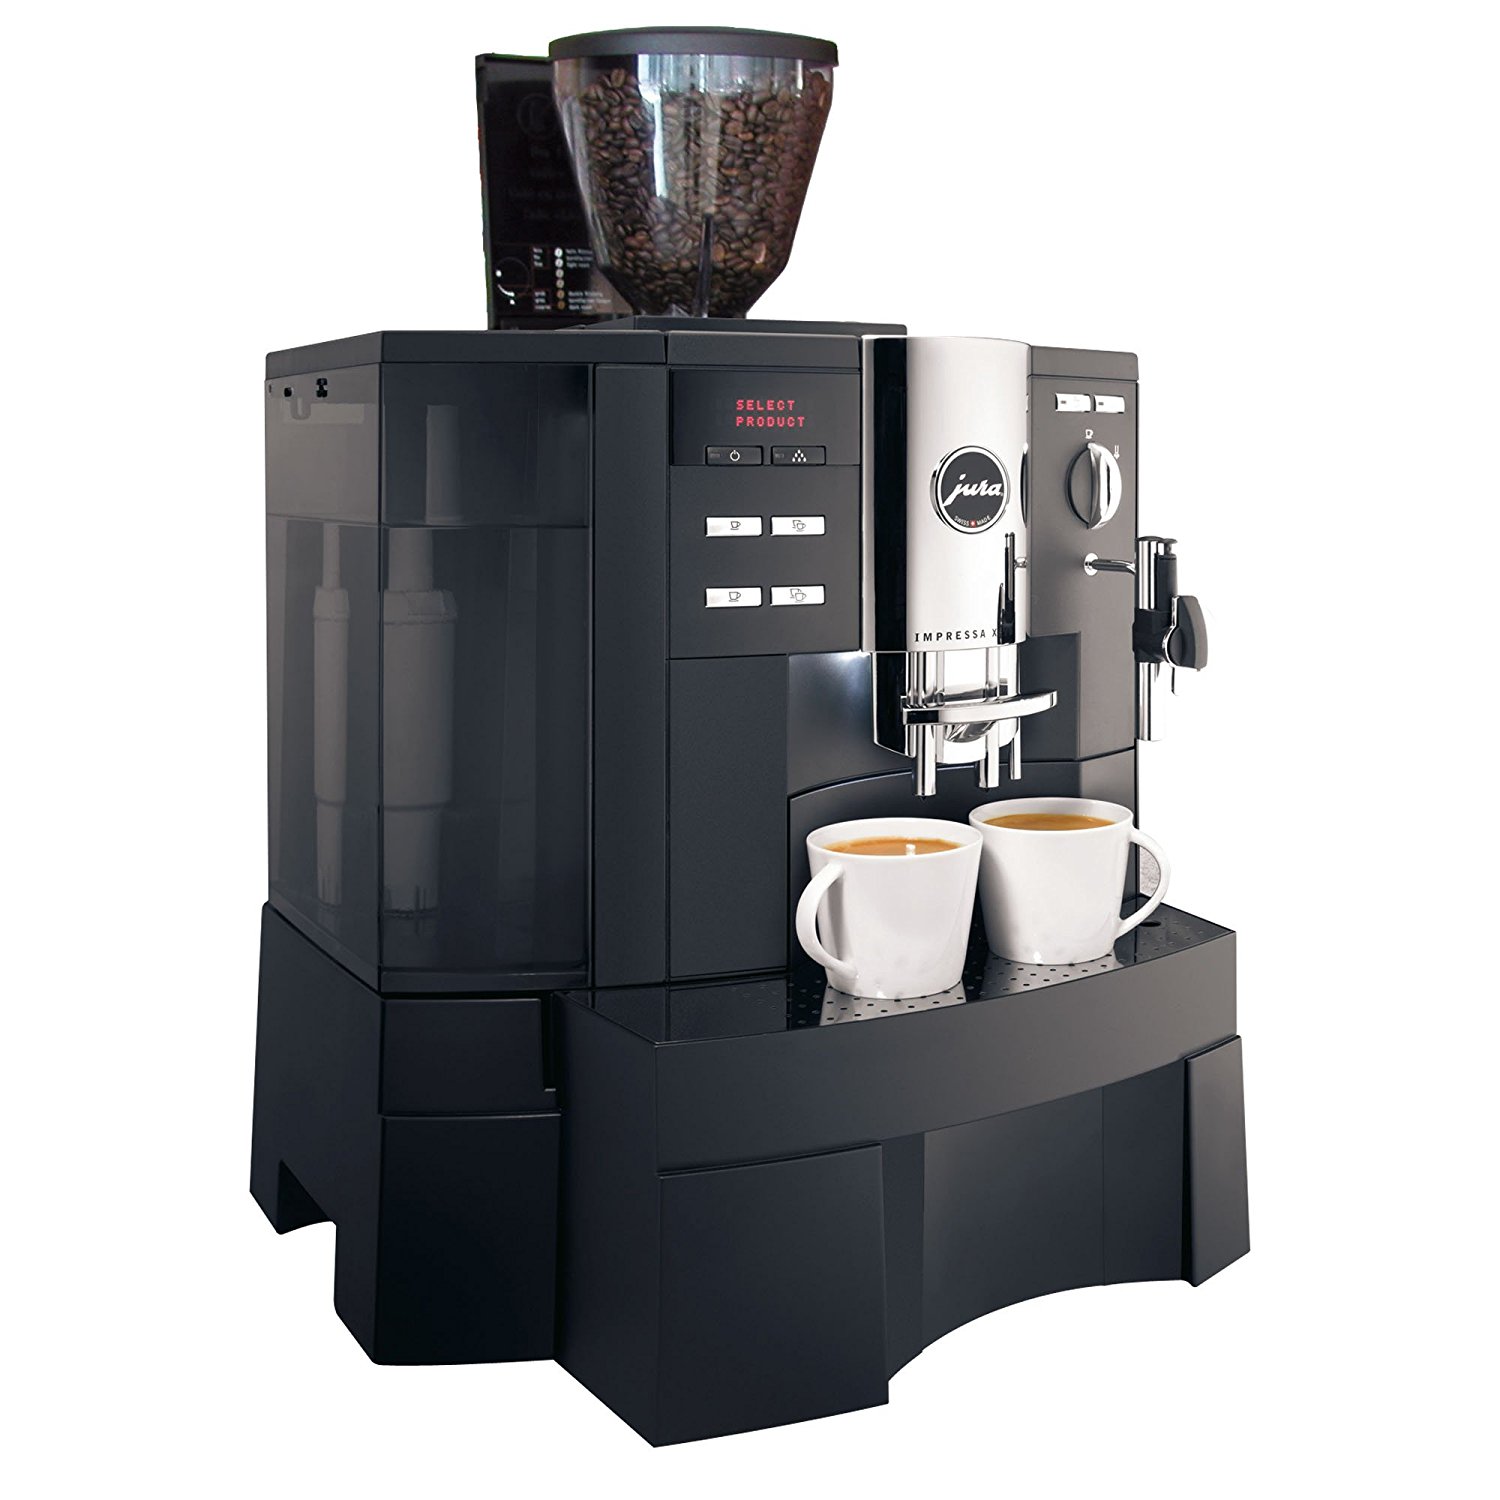 jura-impressa-xs90-one-touch-automatic-coffee-center.jpg